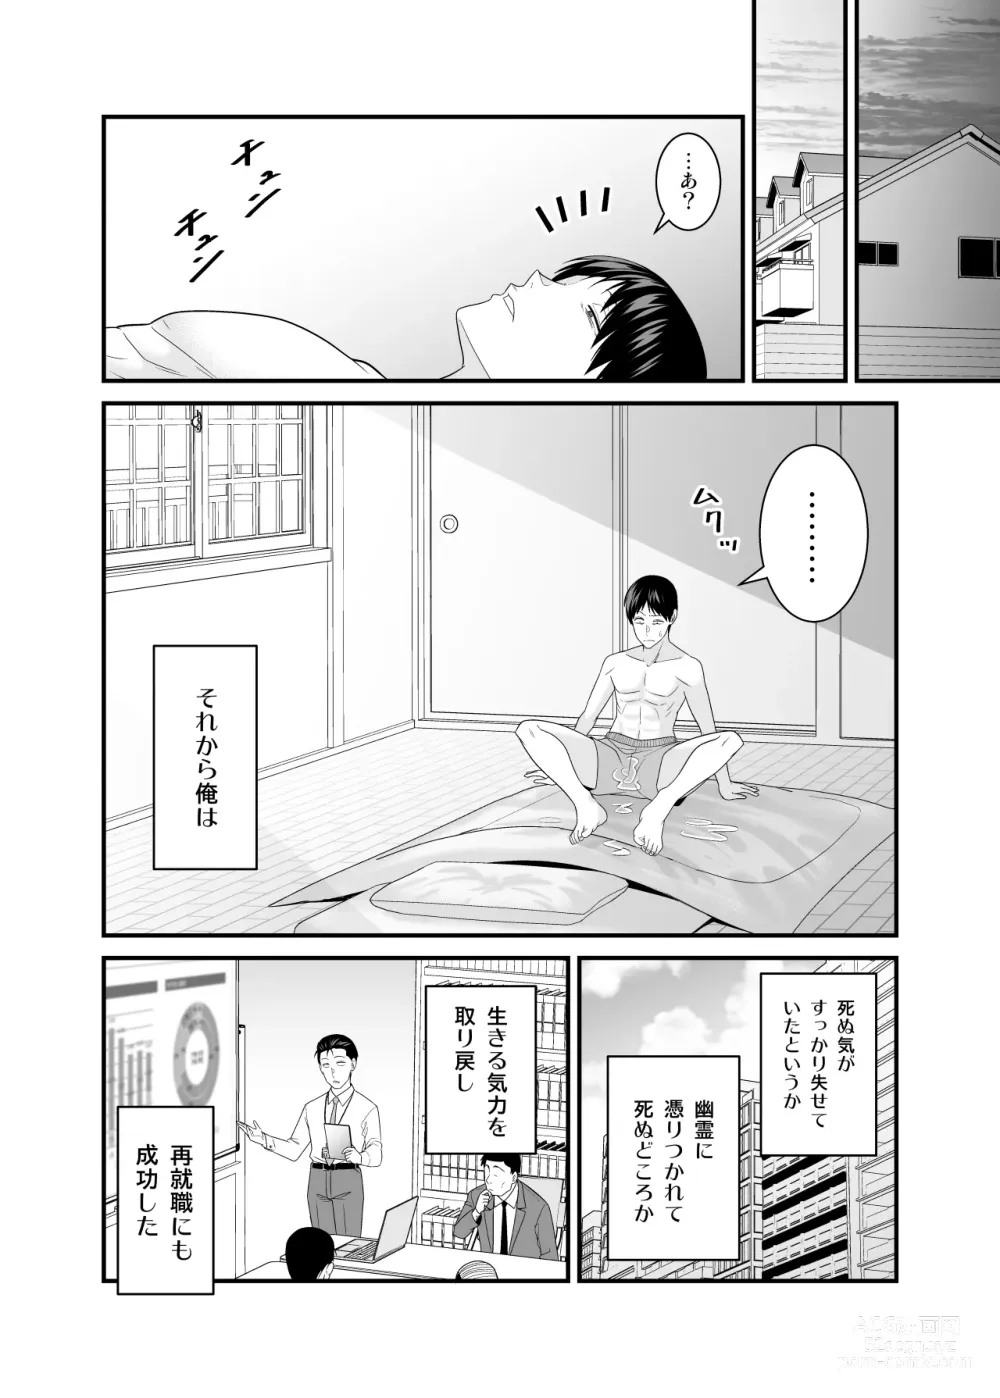 Page 53 of doujinshi ヤバい事故物件に女幽霊が出たけど無職底辺の俺はセックスしまくる